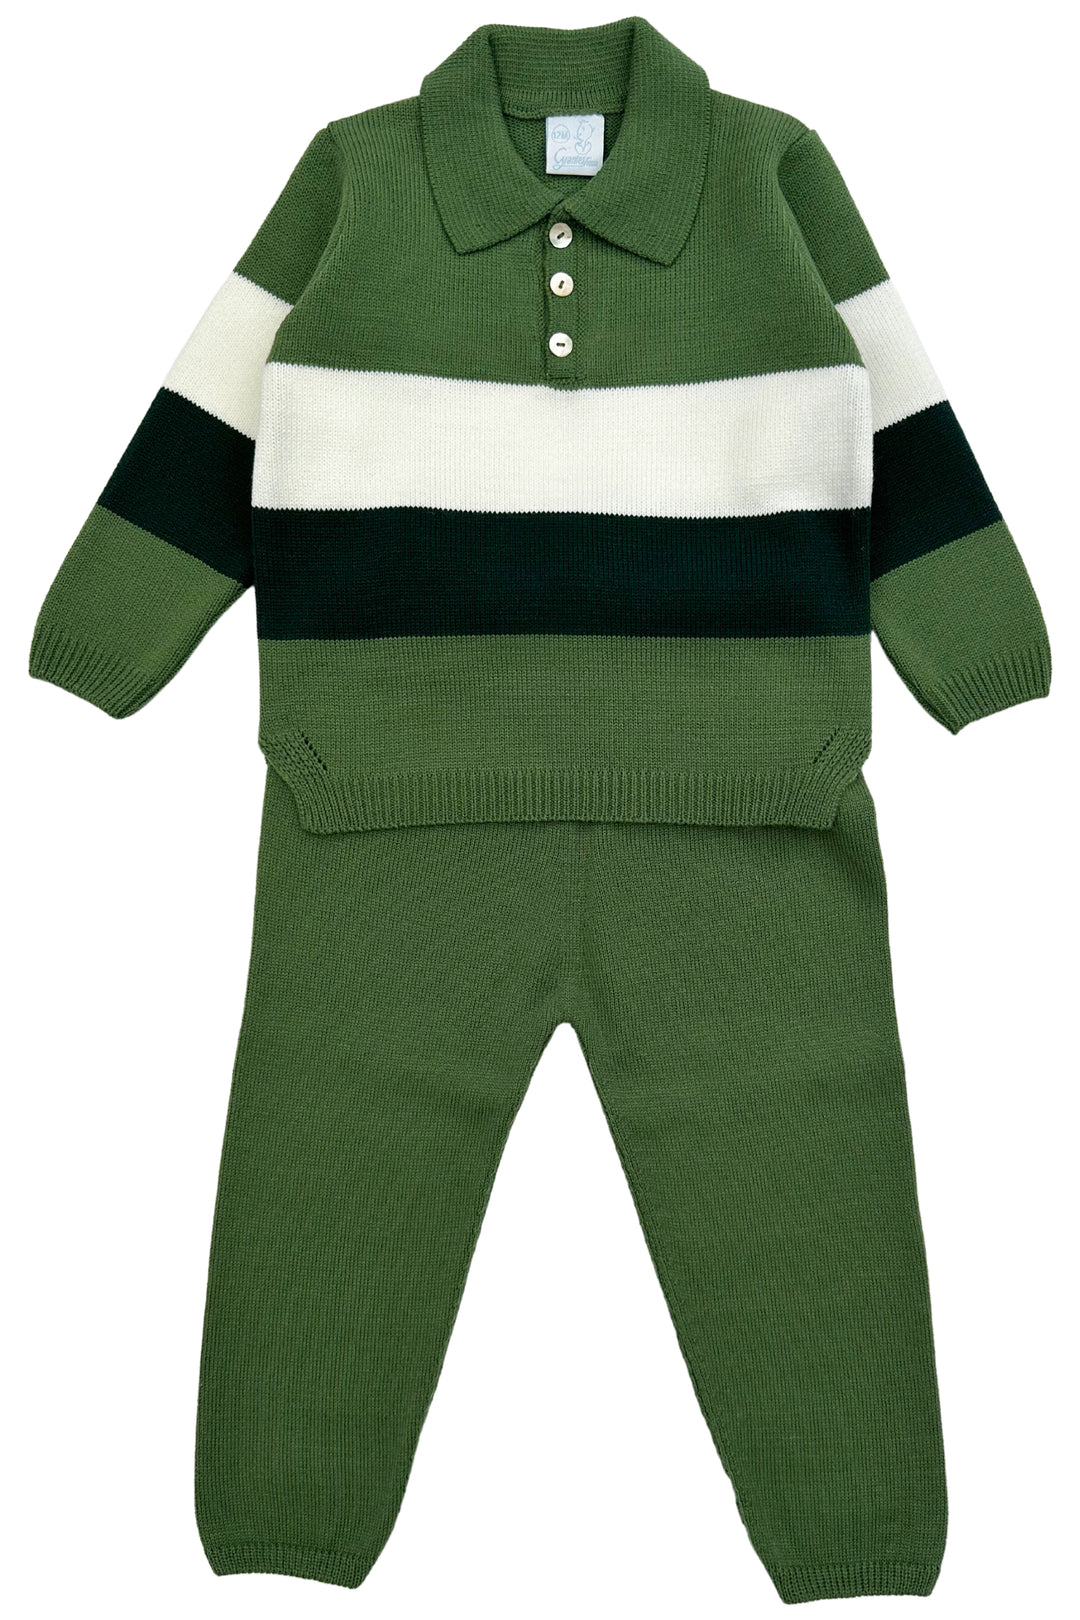 Granlei "Albert" Green Striped Knit Top & Trousers | Millie and John